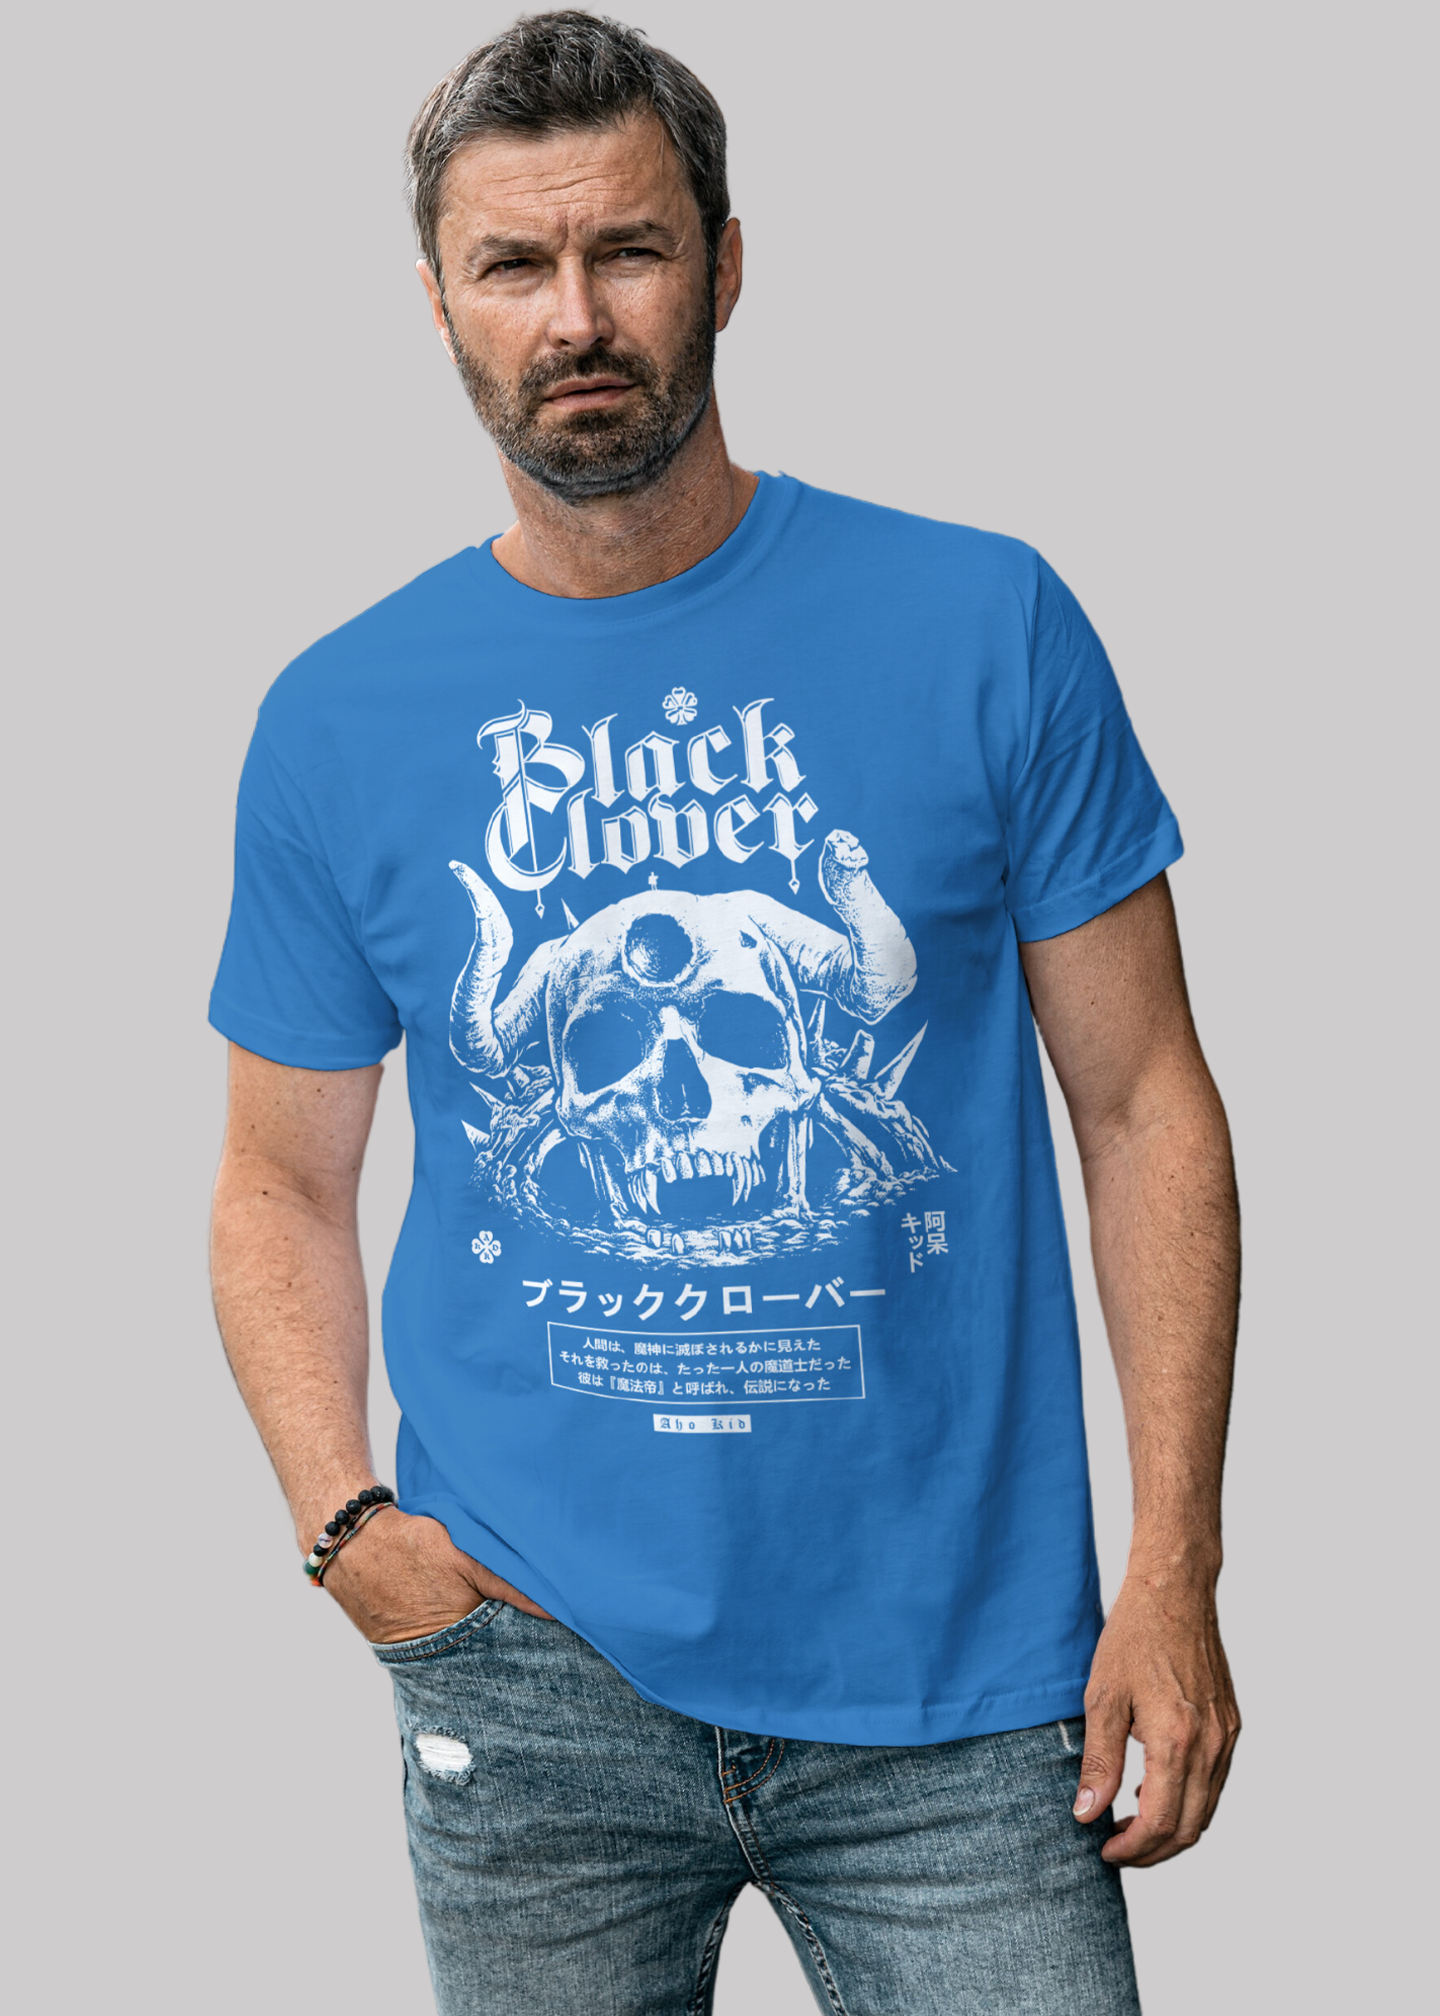 Black beard Printed Half Sleeve Premium Cotton T-shirt For Men